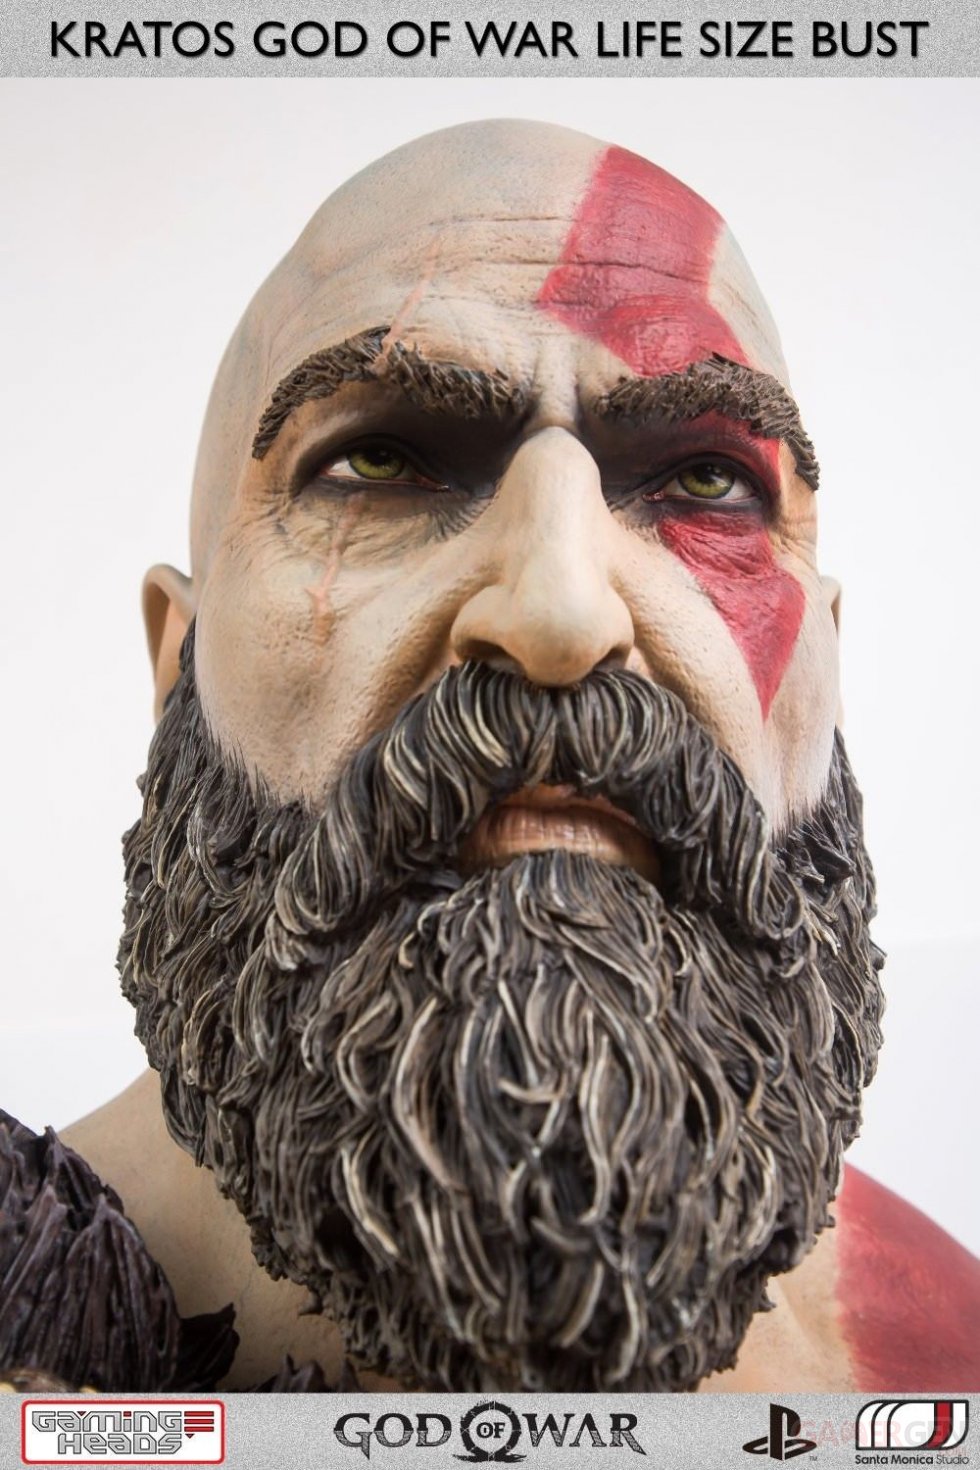 God-of-War-Kratos-buste-26-20-04-2020